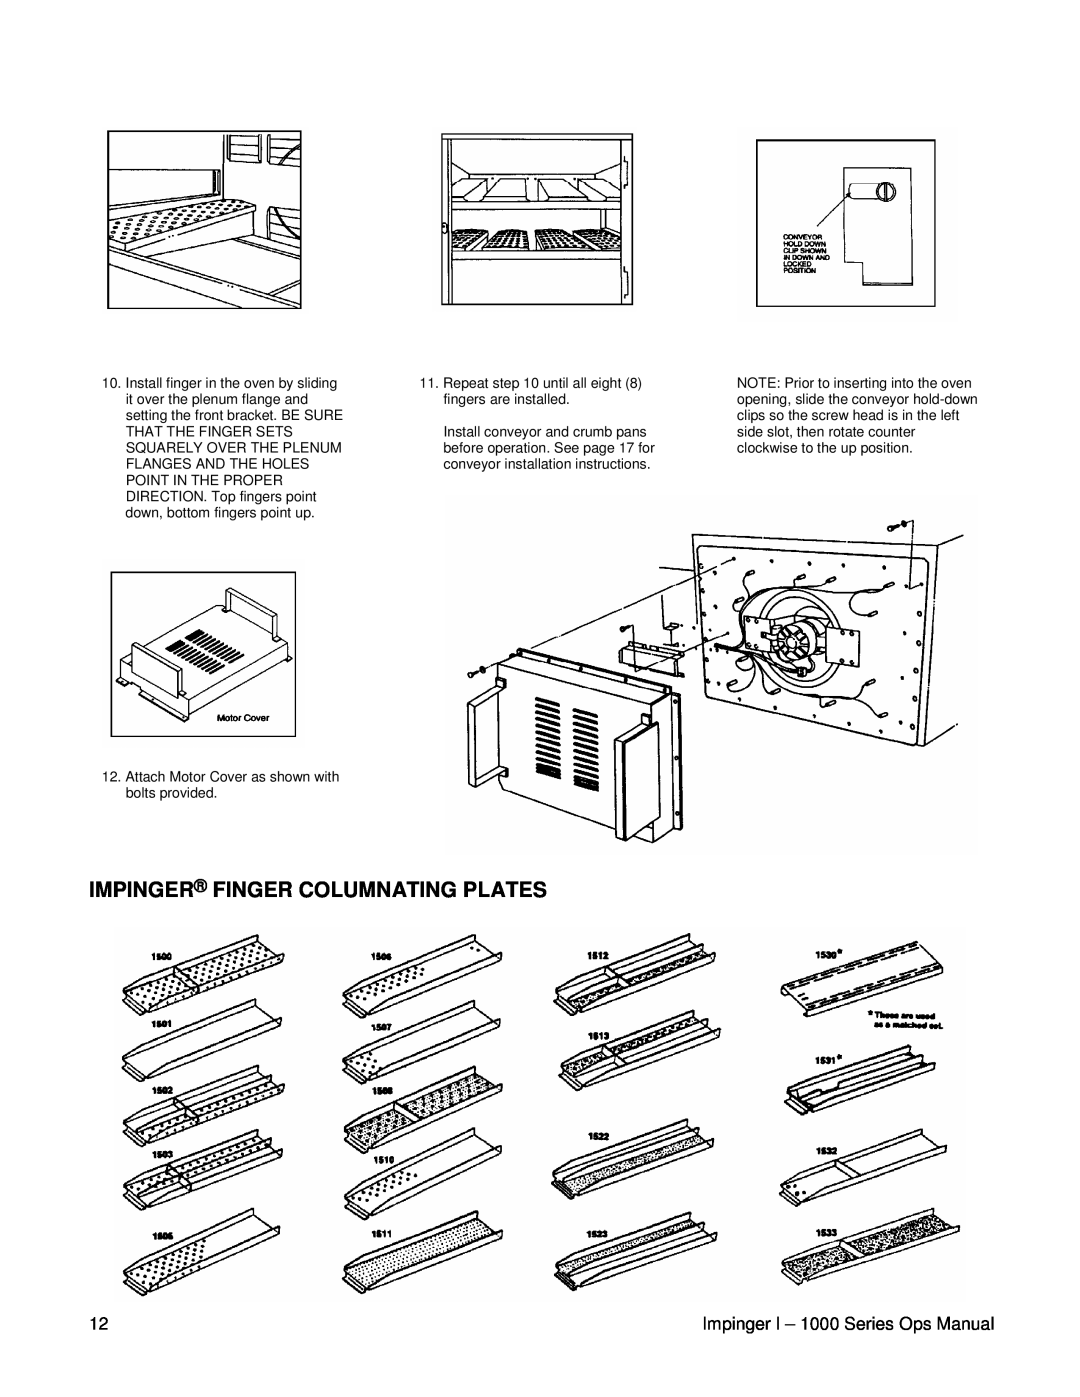 Lincoln 1400, 1200 operating instructions Impinger Finger Columnating Plates, Impinger I – 1000 Series Ops Manual 